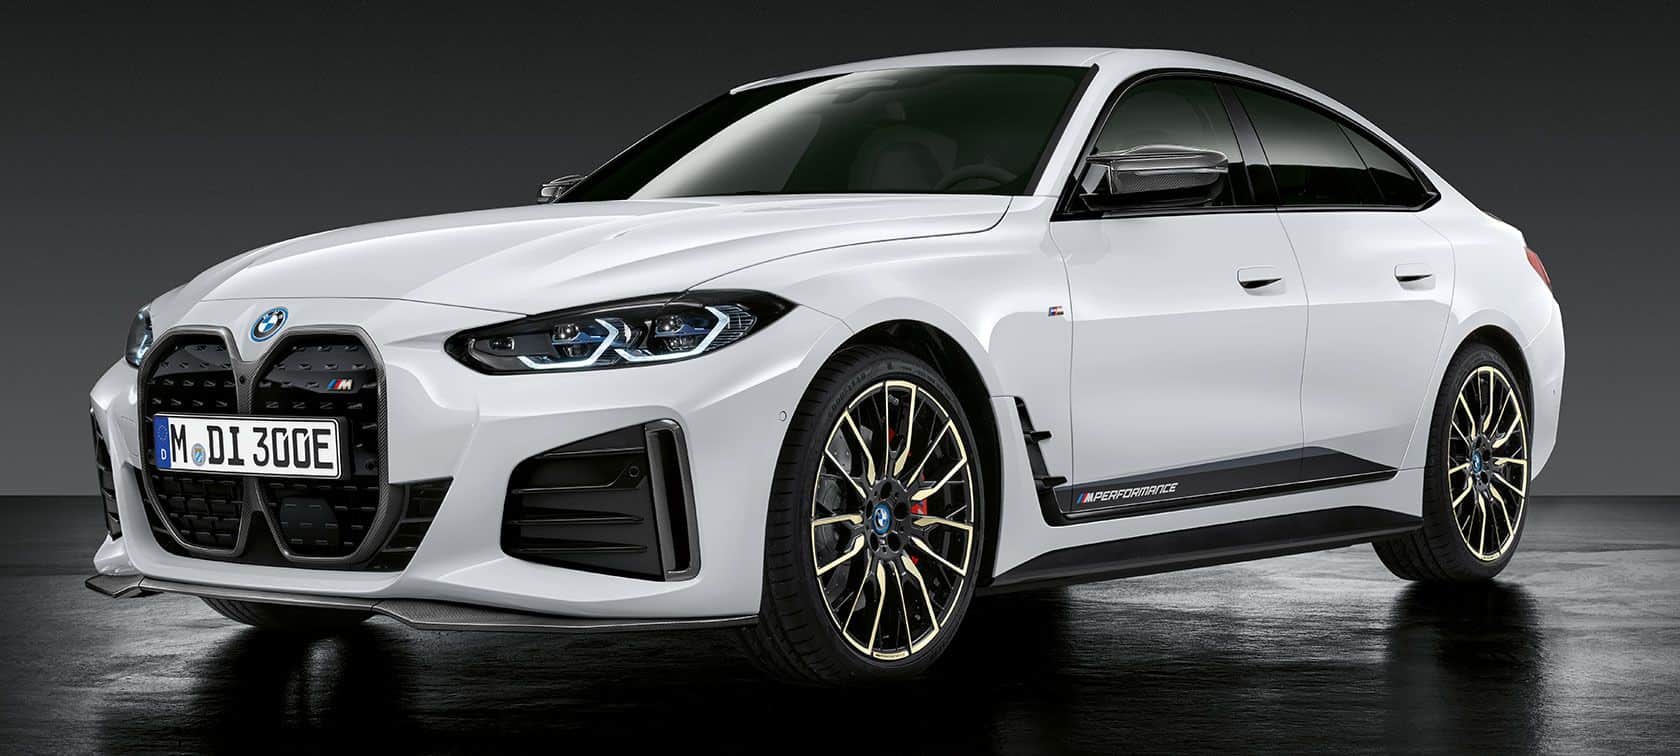 BMW i4 electric car launch: Price